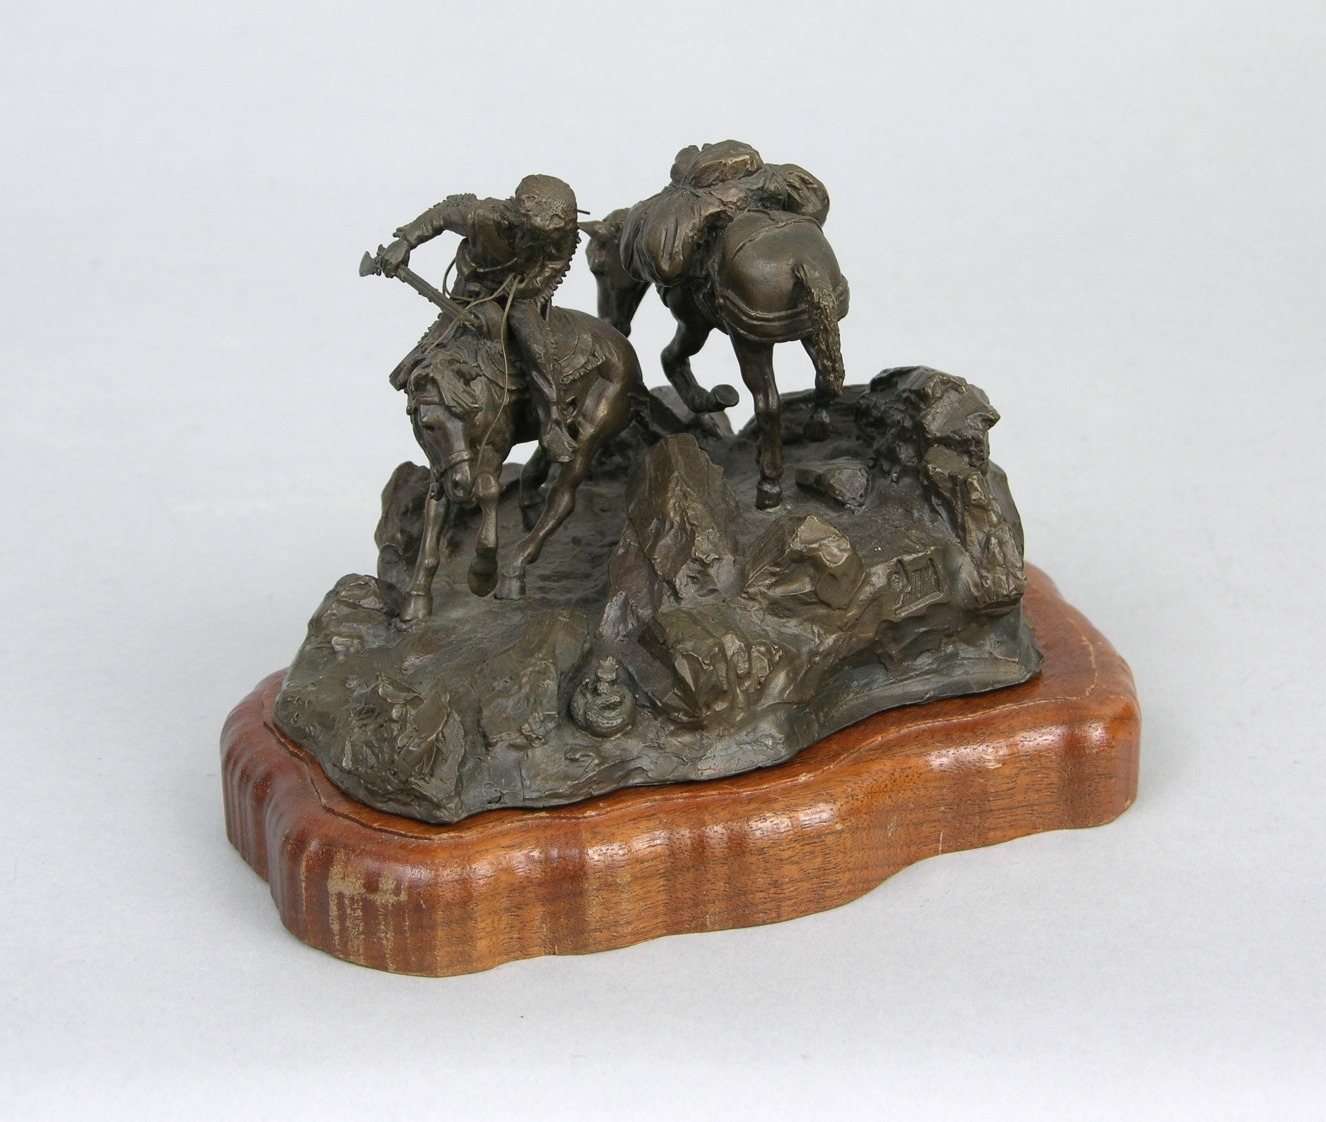 A miniature bronze sculpture by Donald Jack Polland, 1969